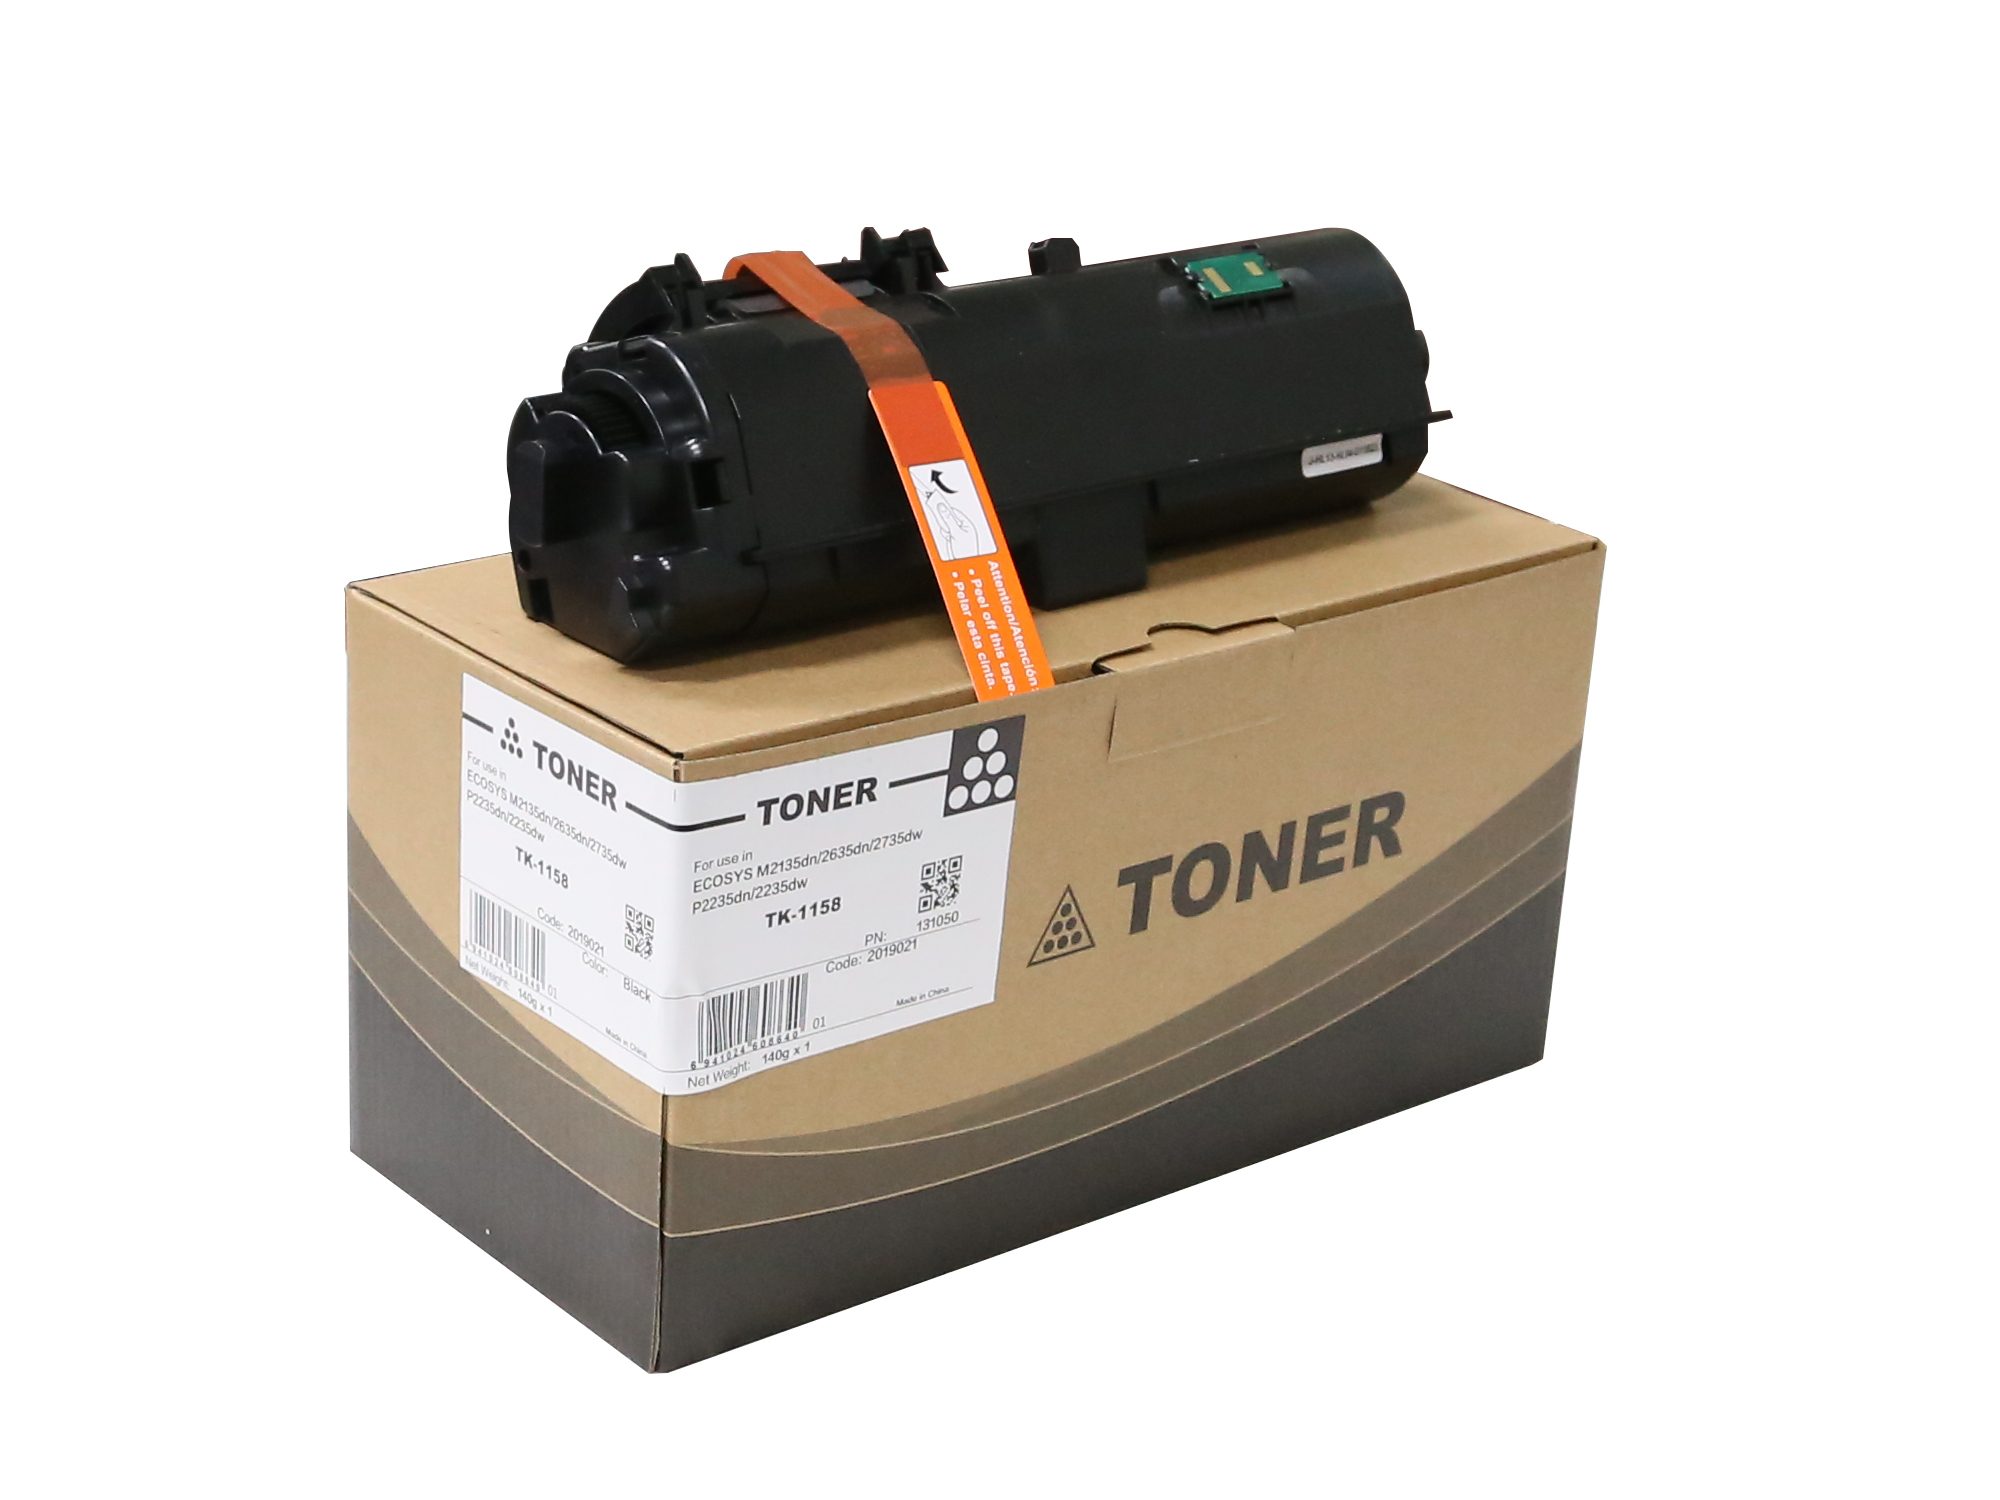 TK-1158 Toner Cartridge for Kyocera ECOSYS M2135dn